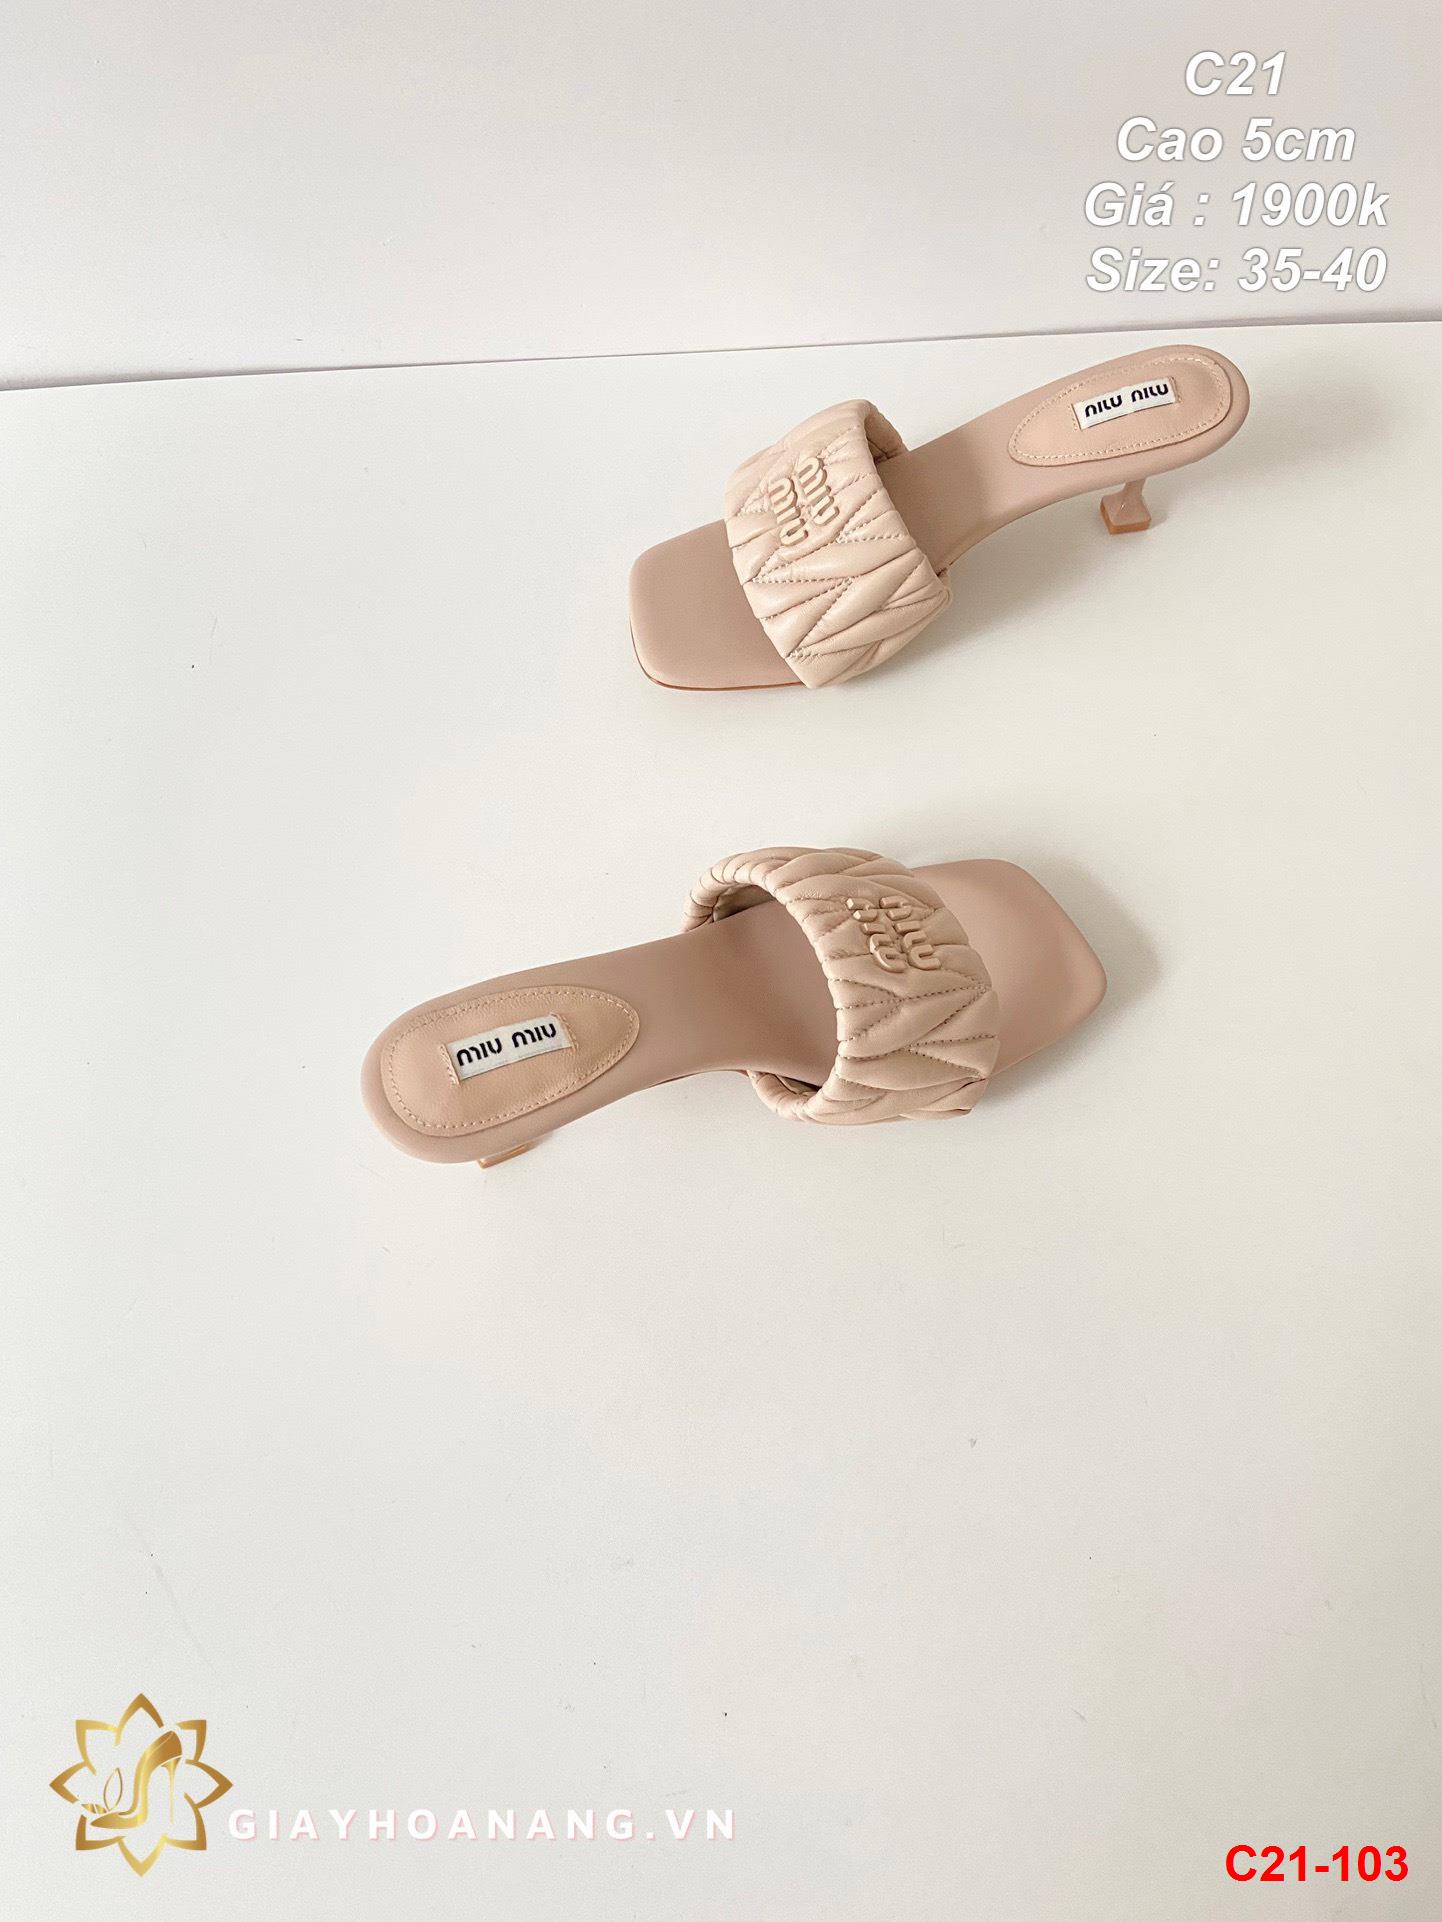 C21-103 Jil sander sandal cao 5cm siêu cấp